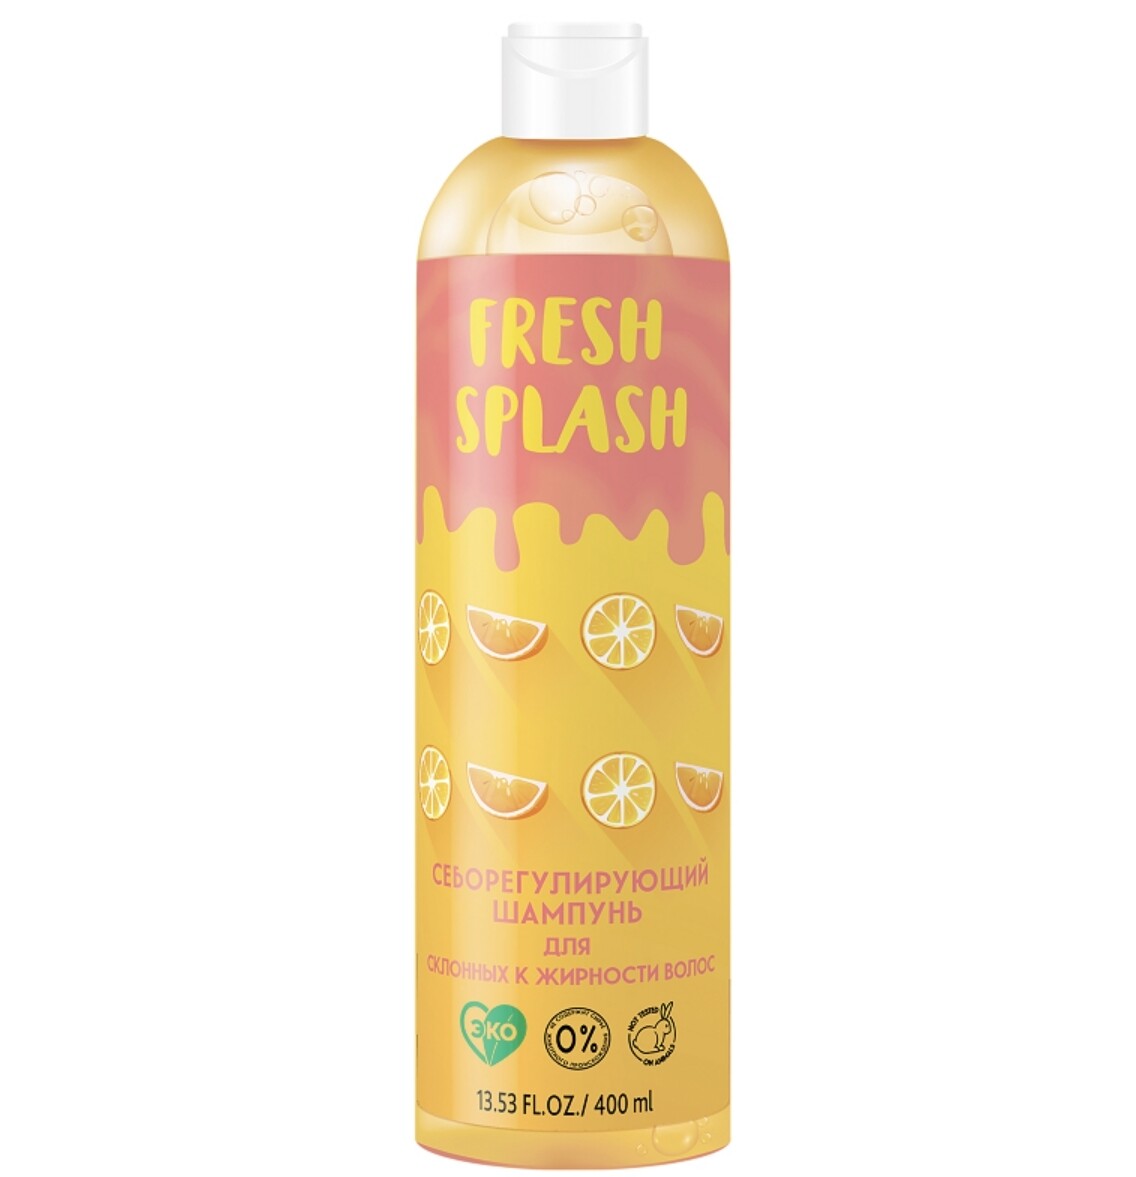 Fresh splash шампунь себорегулирующий для склонных к жирности волос, 400 мл splash page